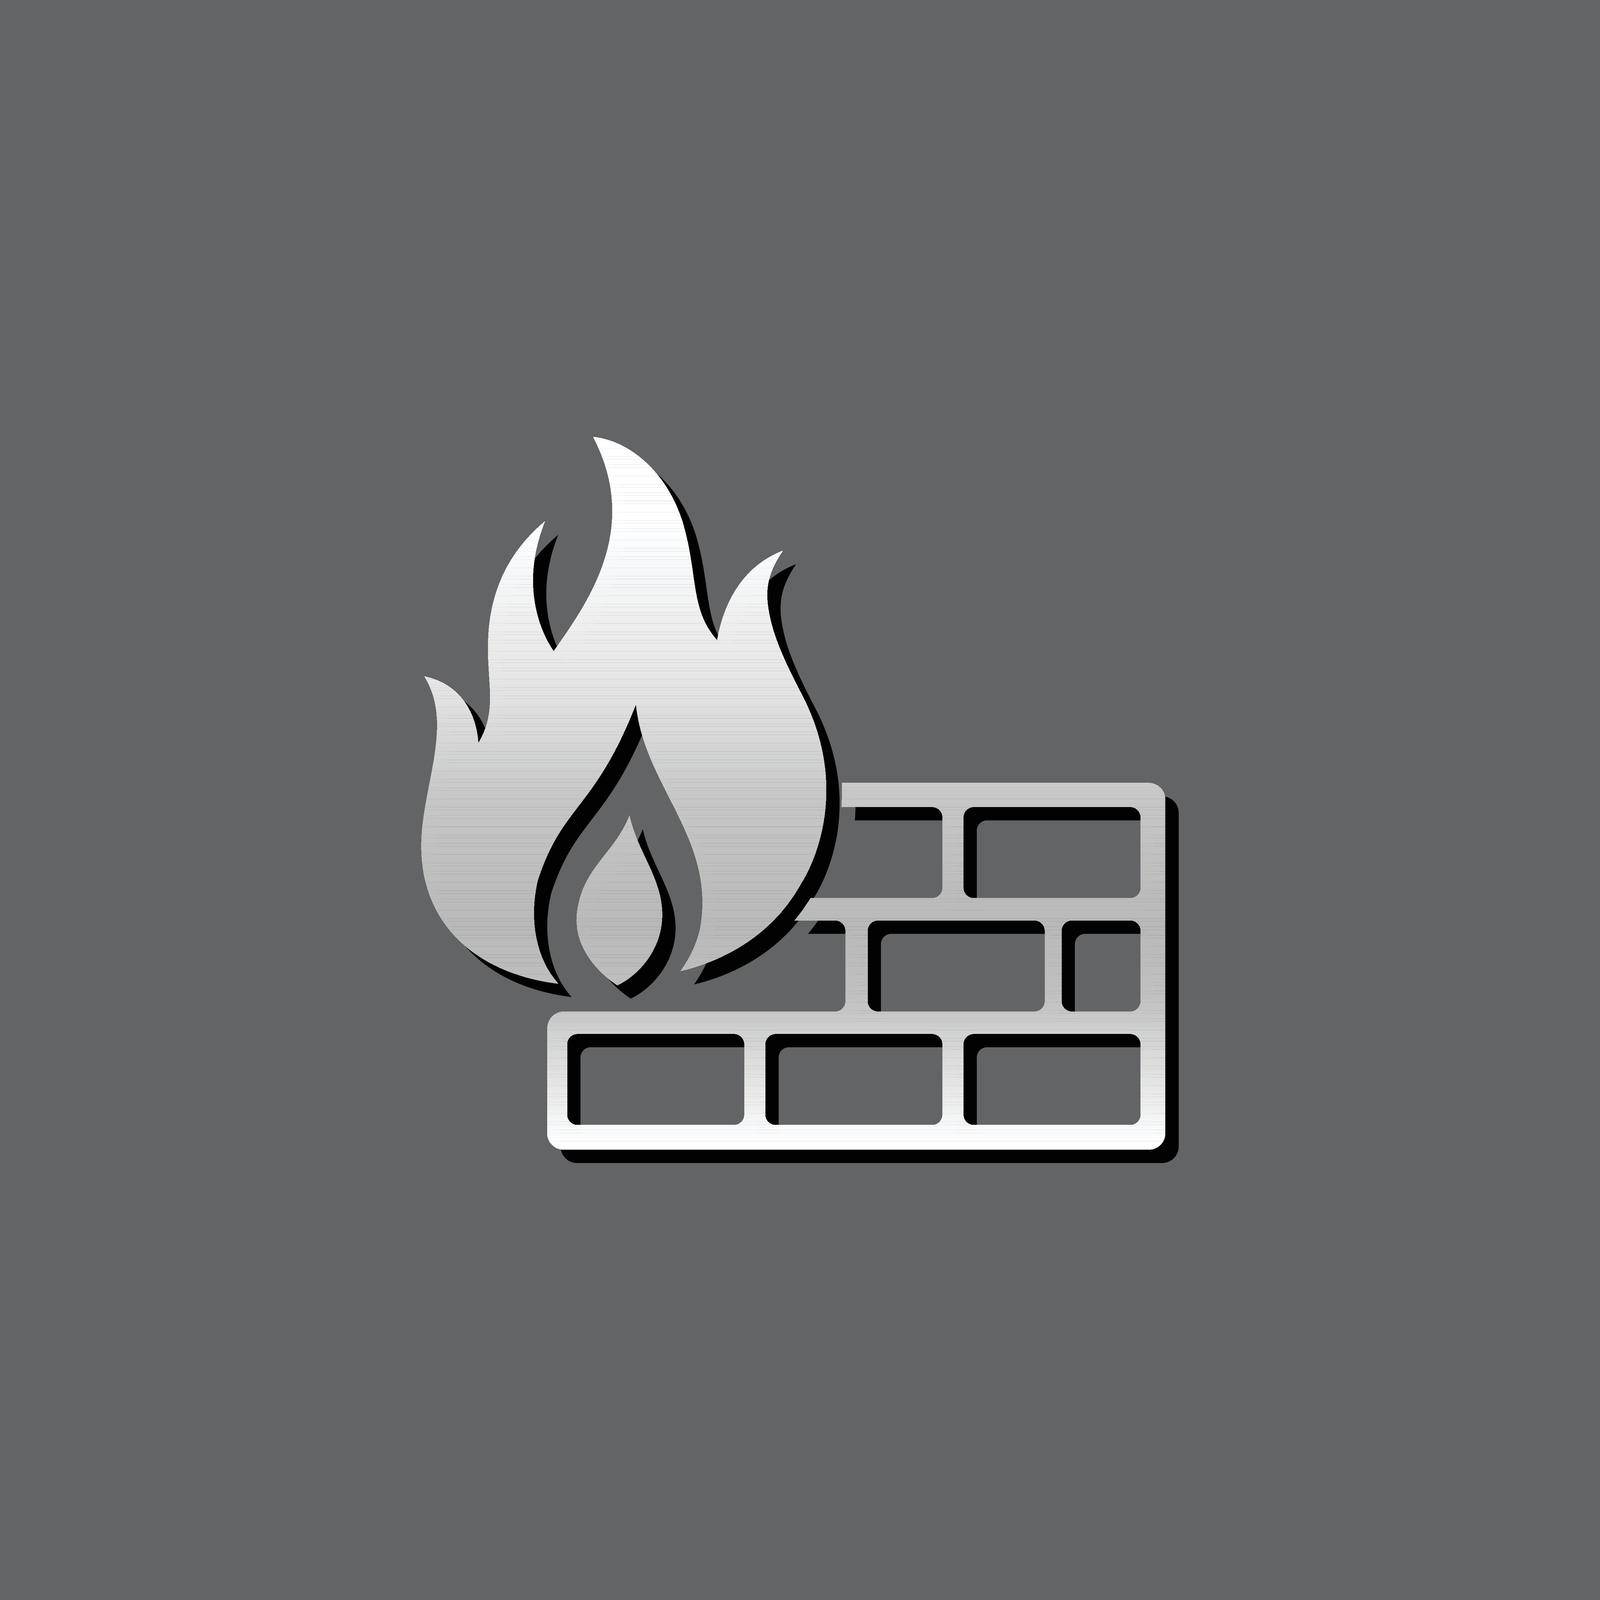 Metallic Icon - Firewall by puruan